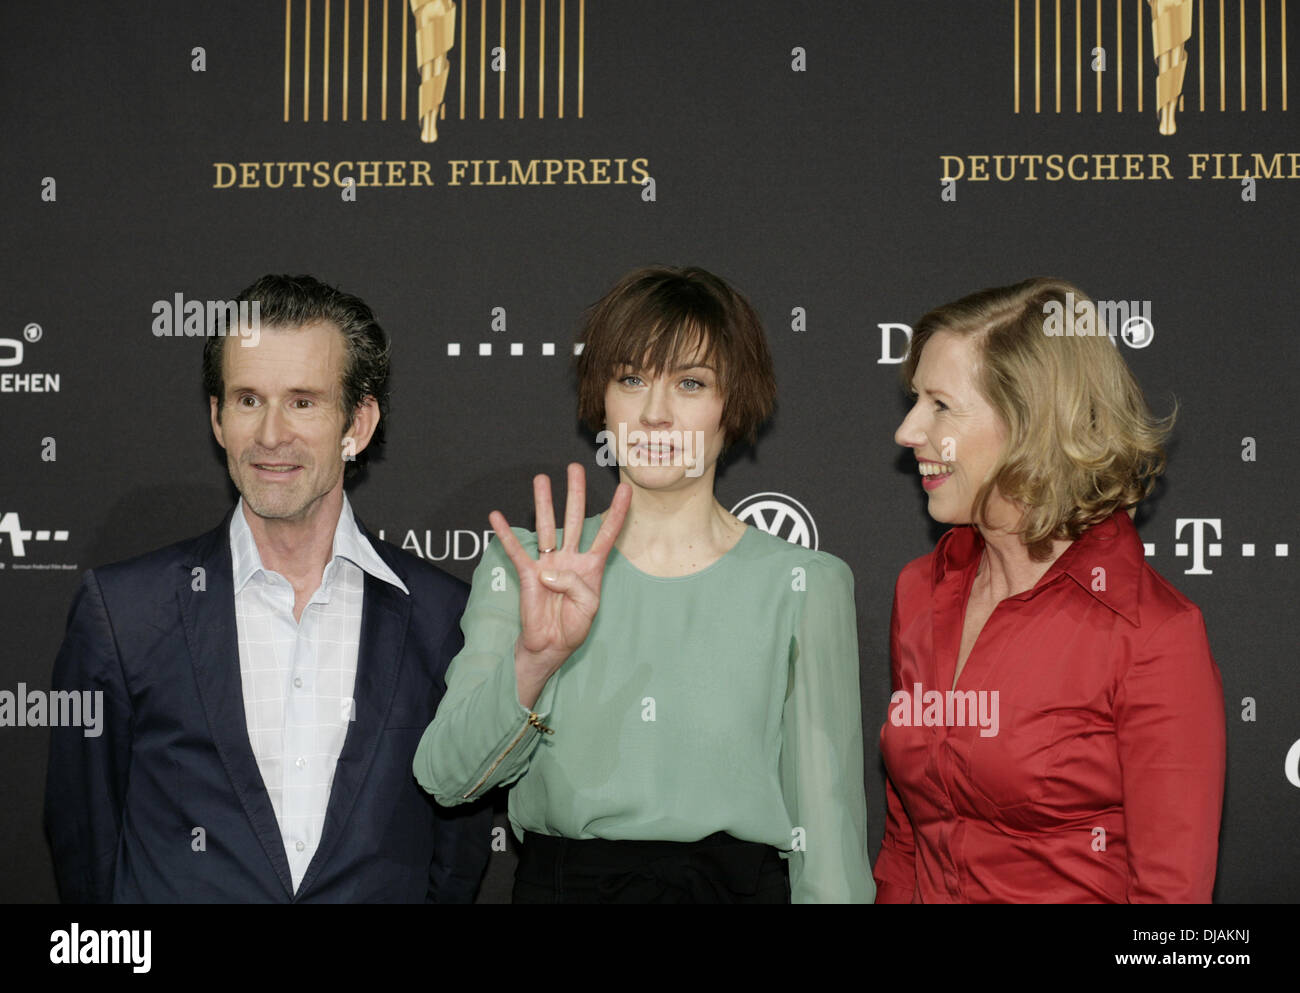 Ulrich Matthes, Christiane Paul and Petra Zieser at the nominations for Deutscher Filmpreis 2012 (German Film Awards) at Friedrichstadtpalast. Berlin, Germany - 23.03.2012 Stock Photo